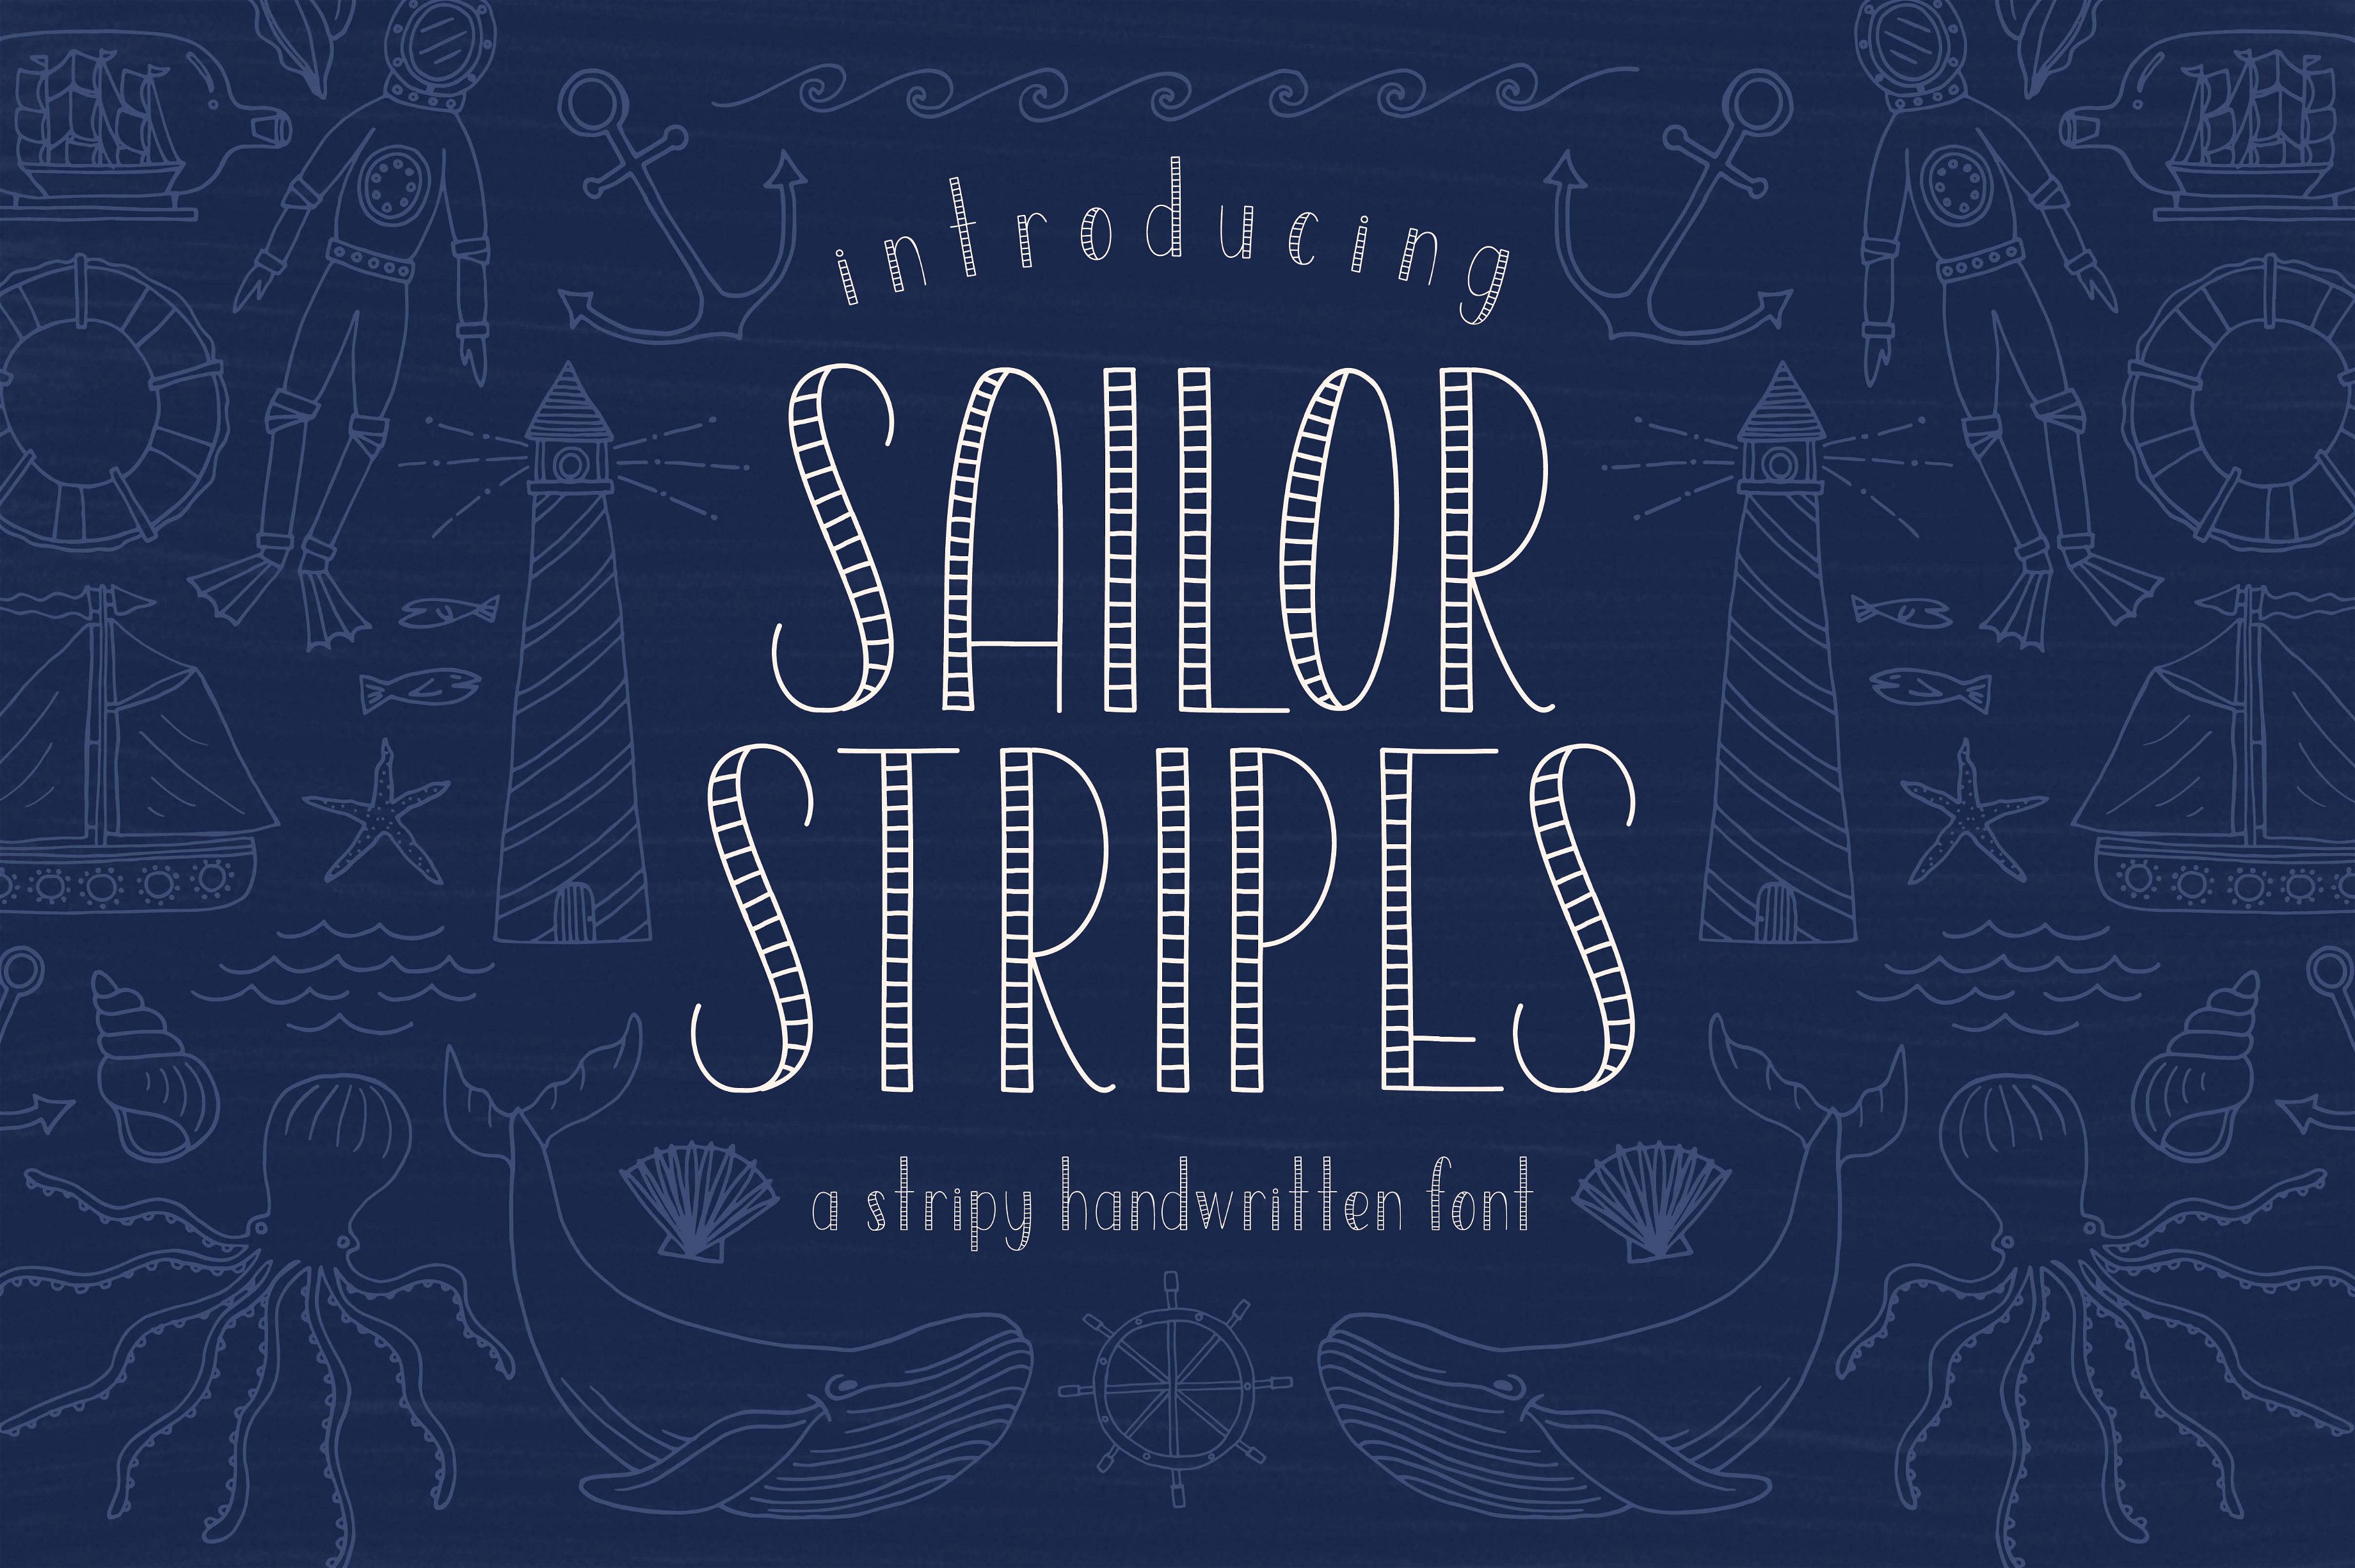 Sailor Stripes San Serif Font And Illustrations